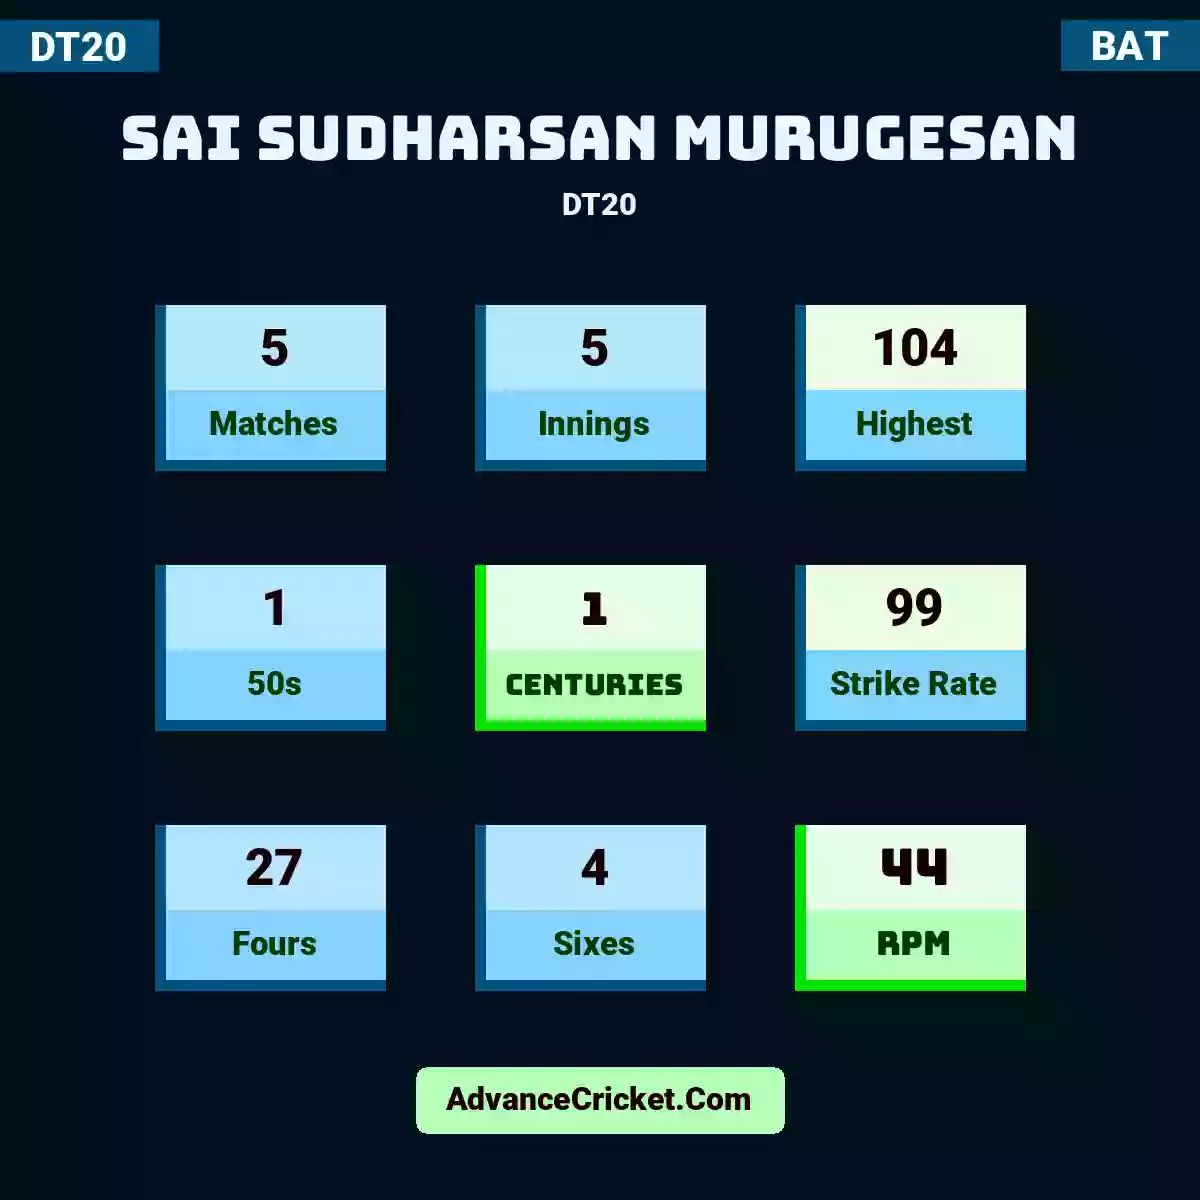 Sai Sudharsan Murugesan DT20 , Sai Sudharsan Murugesan played 5 matches, scored 104 runs as highest, 1 half-centuries, and 1 centuries, with a strike rate of 99. S.Sudharsan.Murugesan hit 27 fours and 4 sixes, with an RPM of 44.